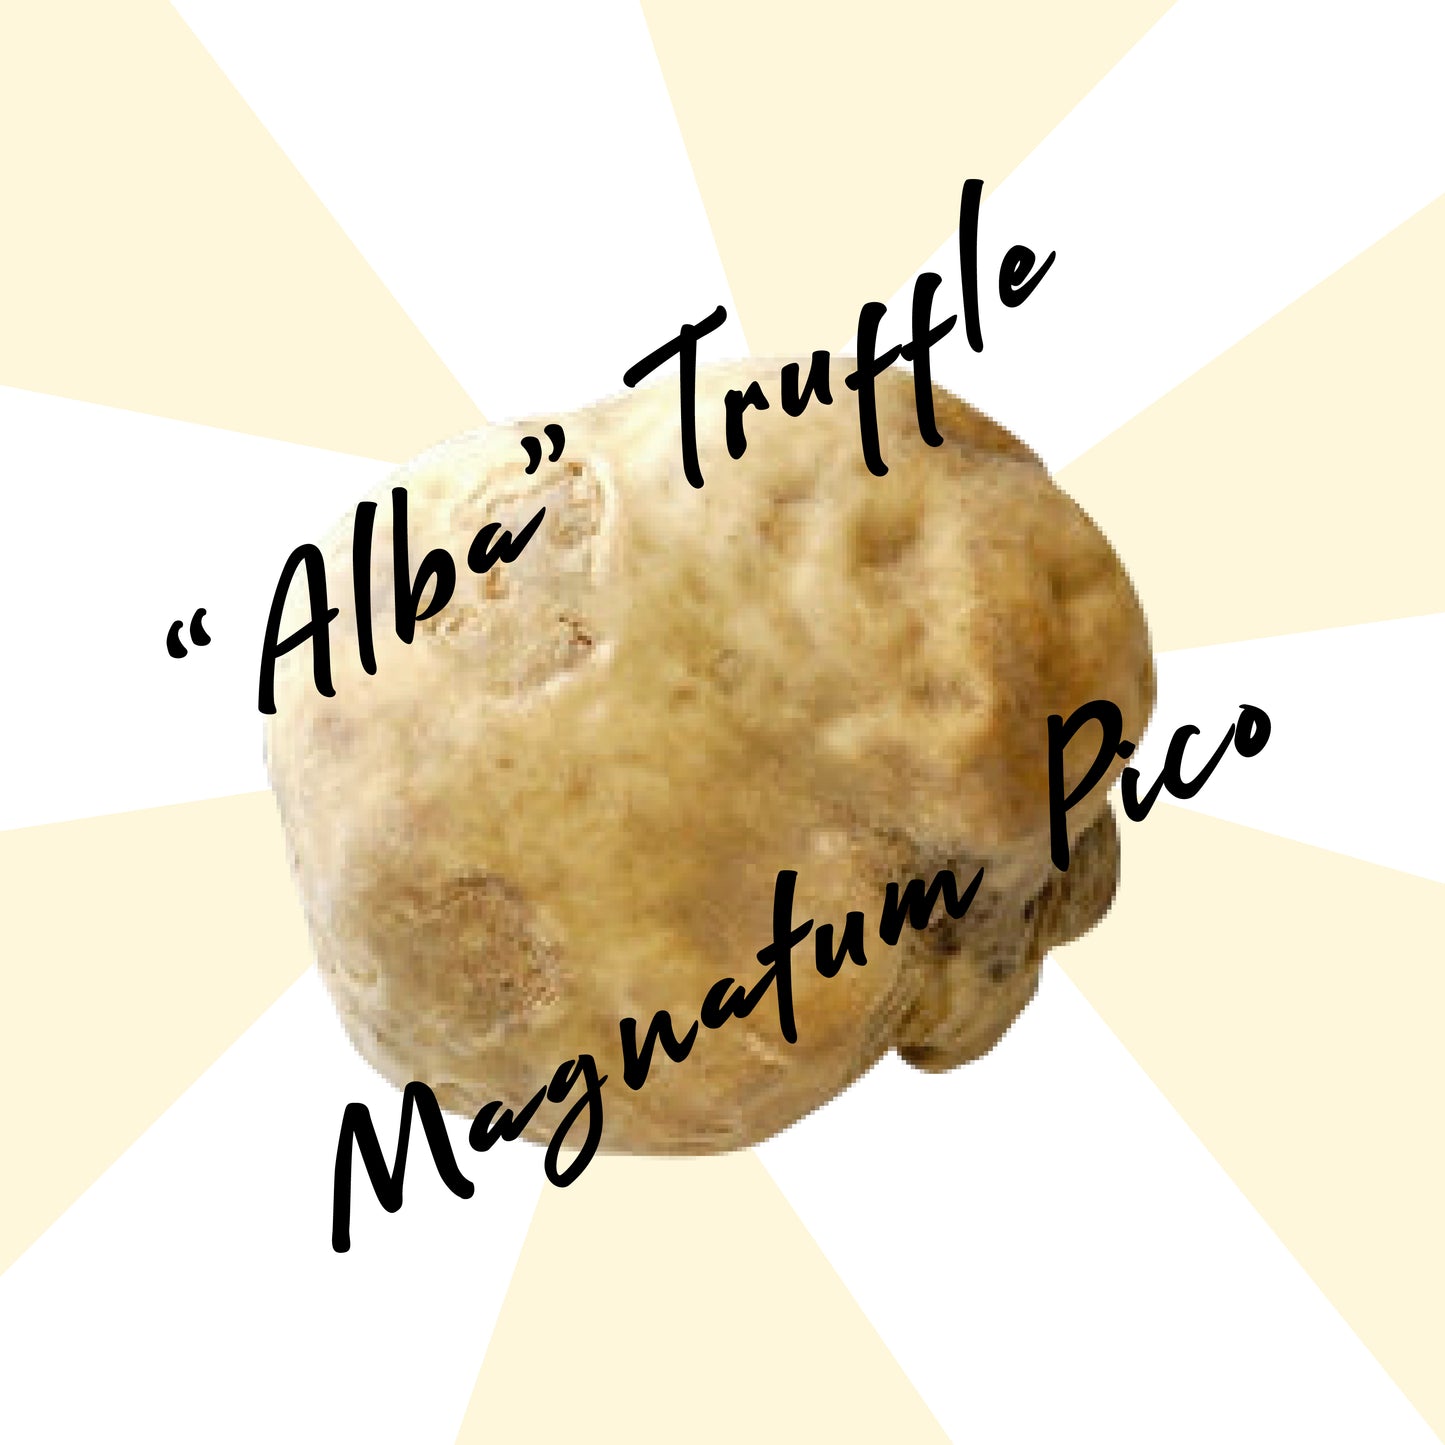 3_truffe White of Alba, Provenance Italy, Tuber Magnatum Pico